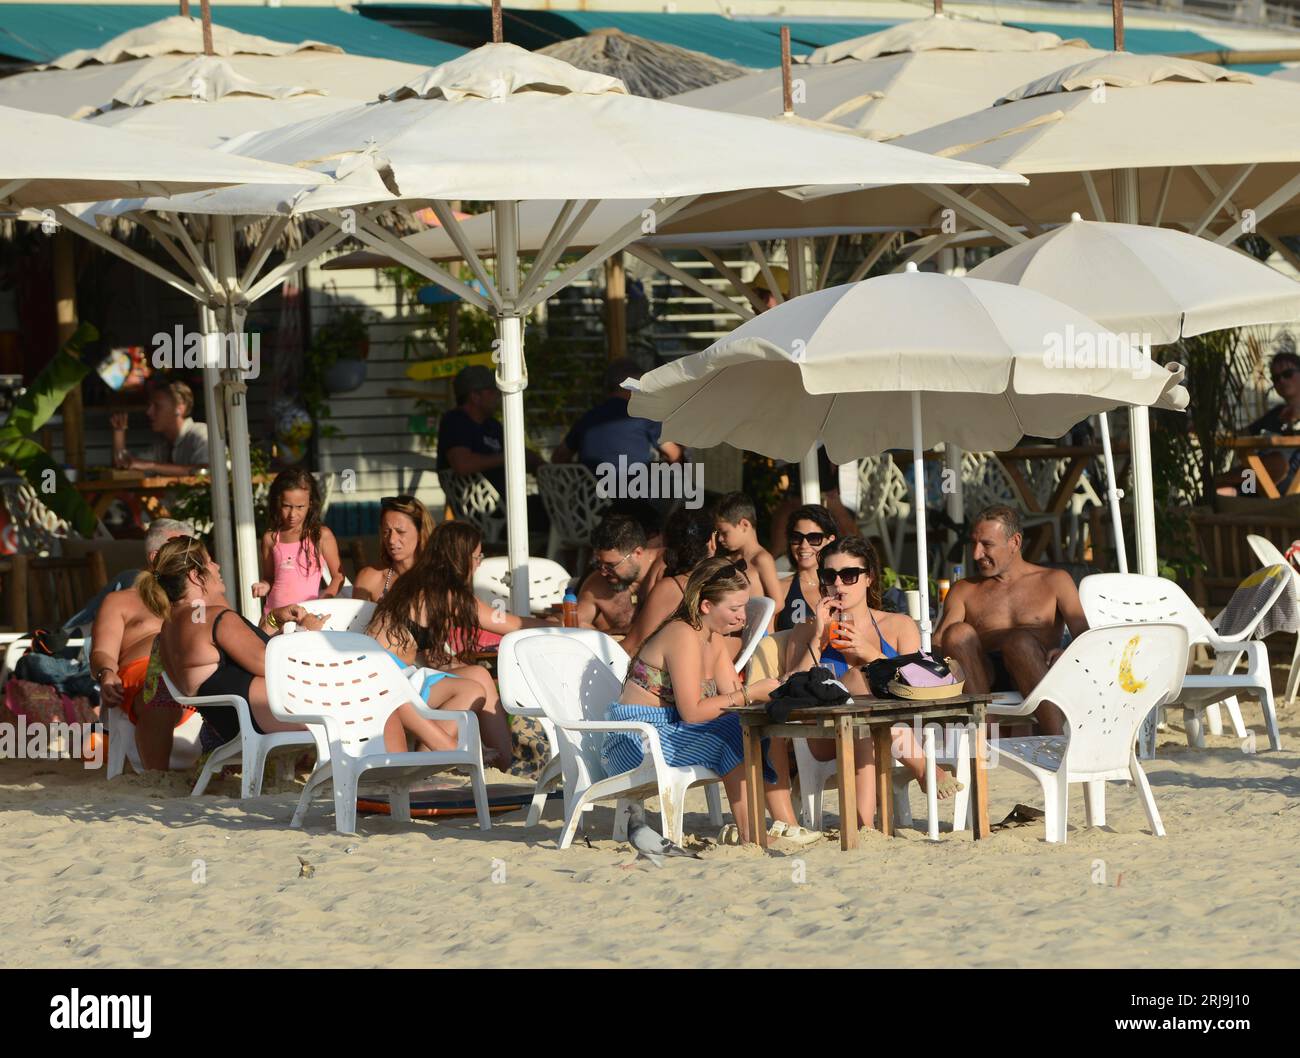 Enjoying drinks at the Banana beach restaurant in Tel-Aviv, Israel. Stock Photo